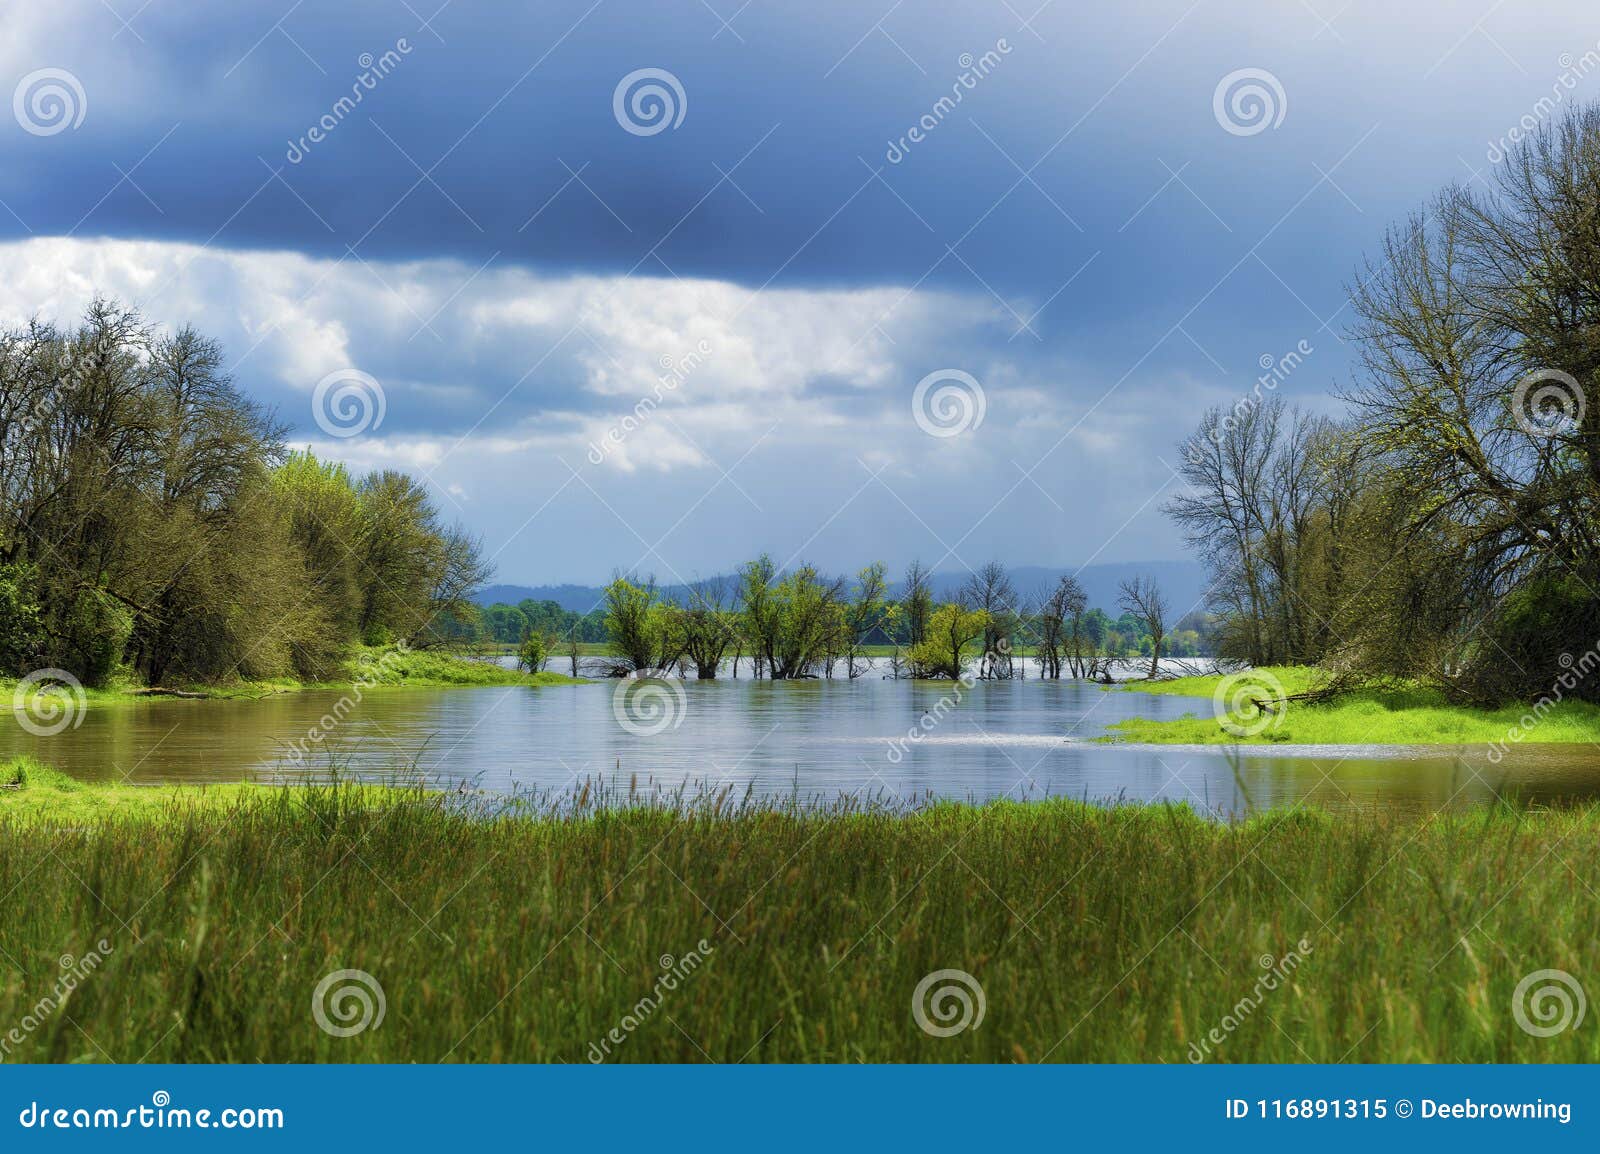 spring rains flood the already saturated wetlands on sauvie isl